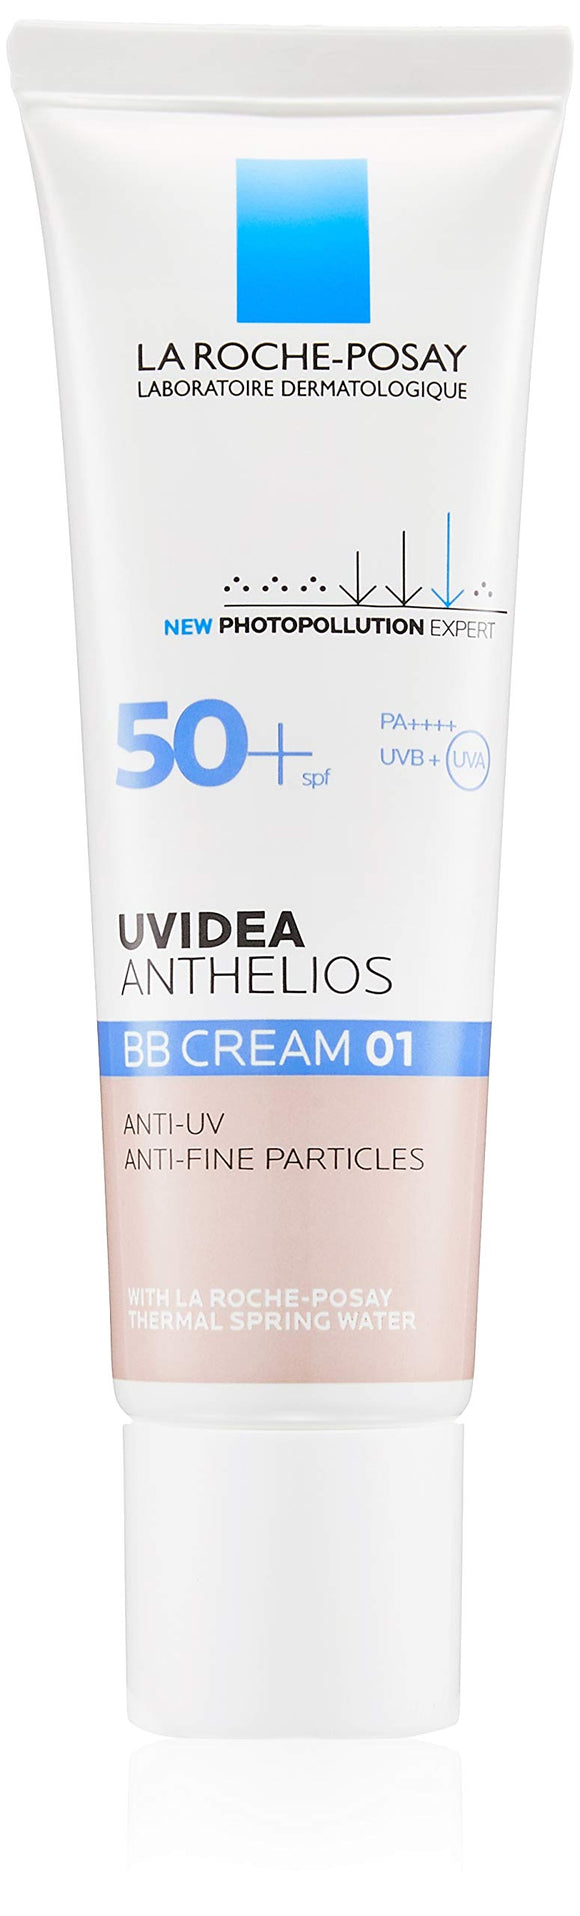 La Roche-Posay [Sunscreen BB Cream] UV Idea XL Protection BB (01 Light) SPF50+ PA++++ Moisturizing Sensitive Skin Cream Ladies 01 Light Single Item 01 30ml